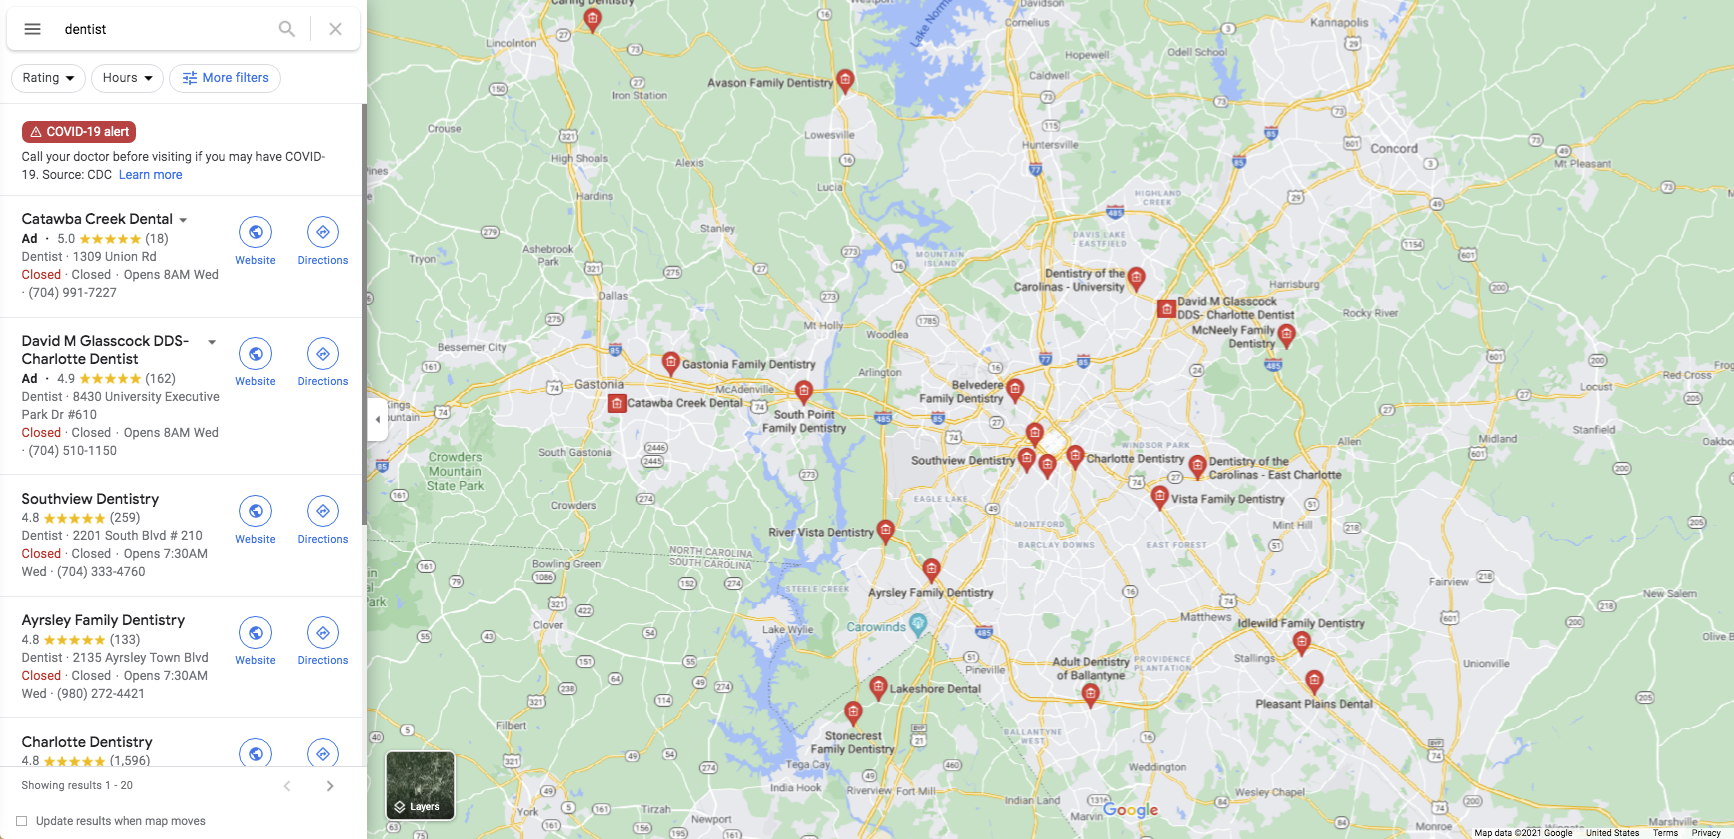 Multi-location Dental Groups in Charlotte